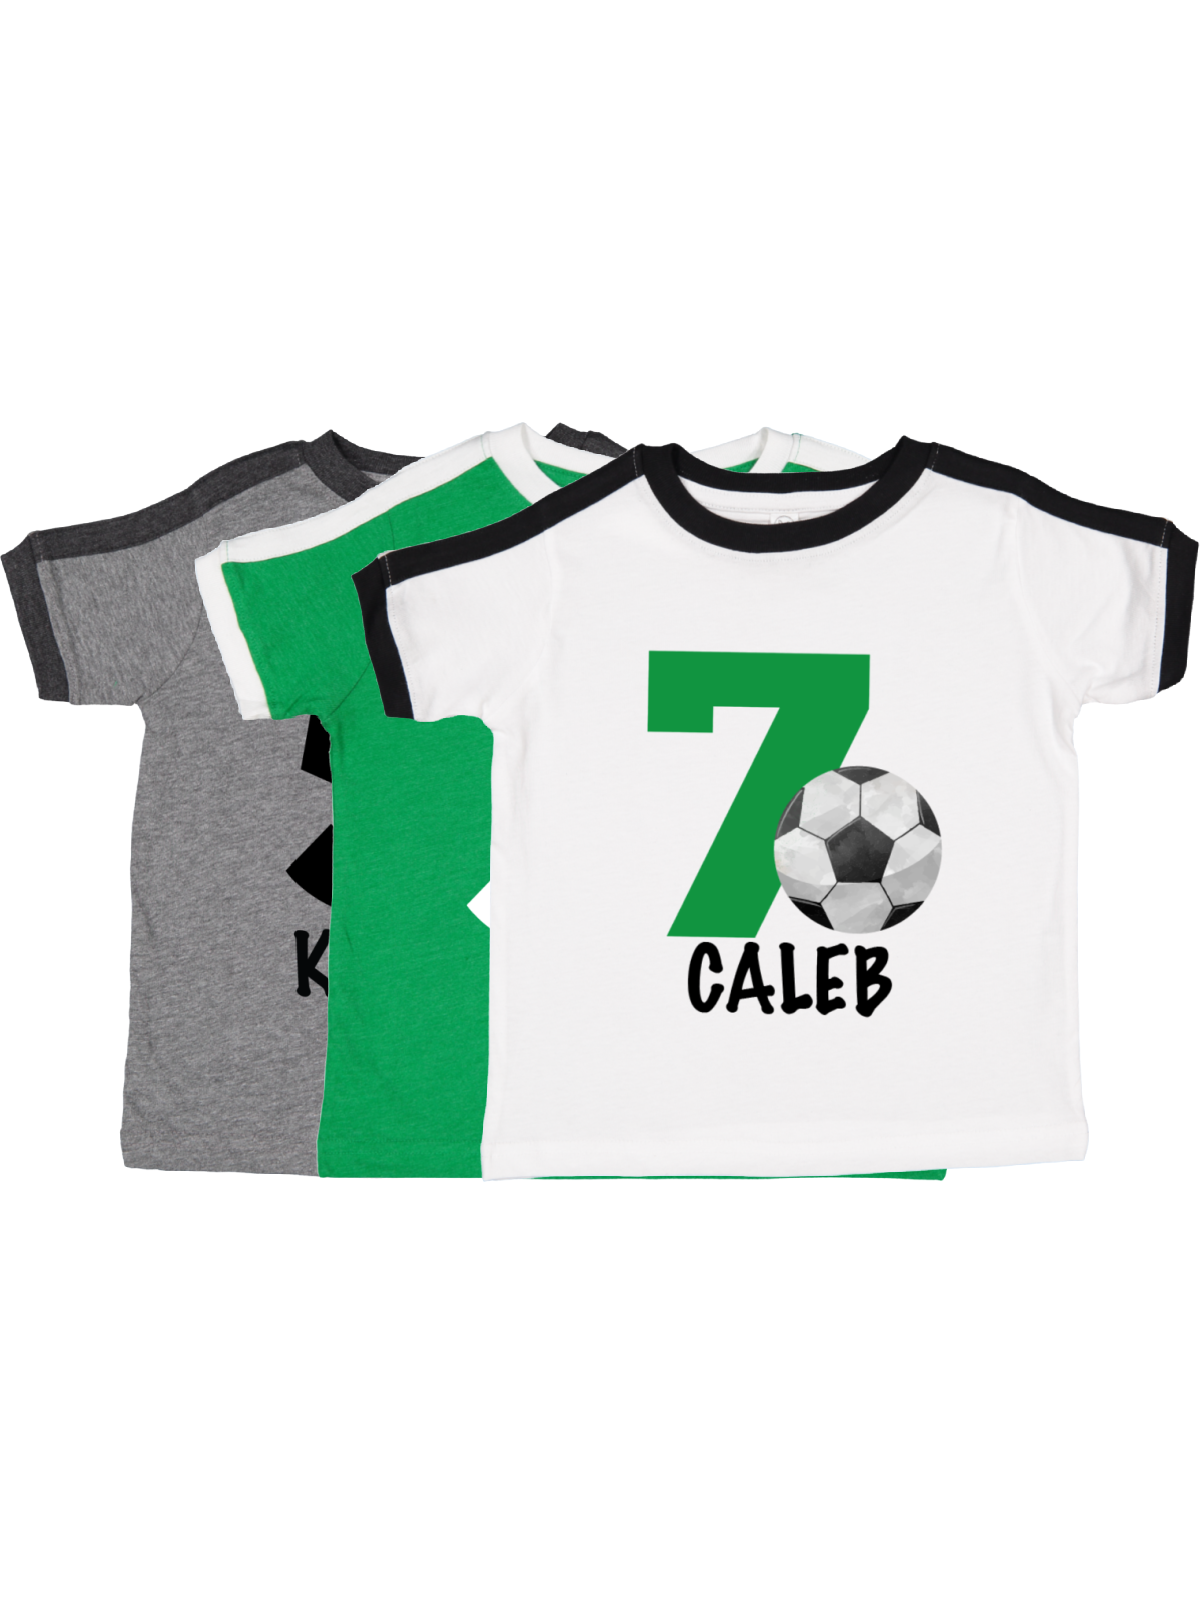 kids soccer ball birthday shirts